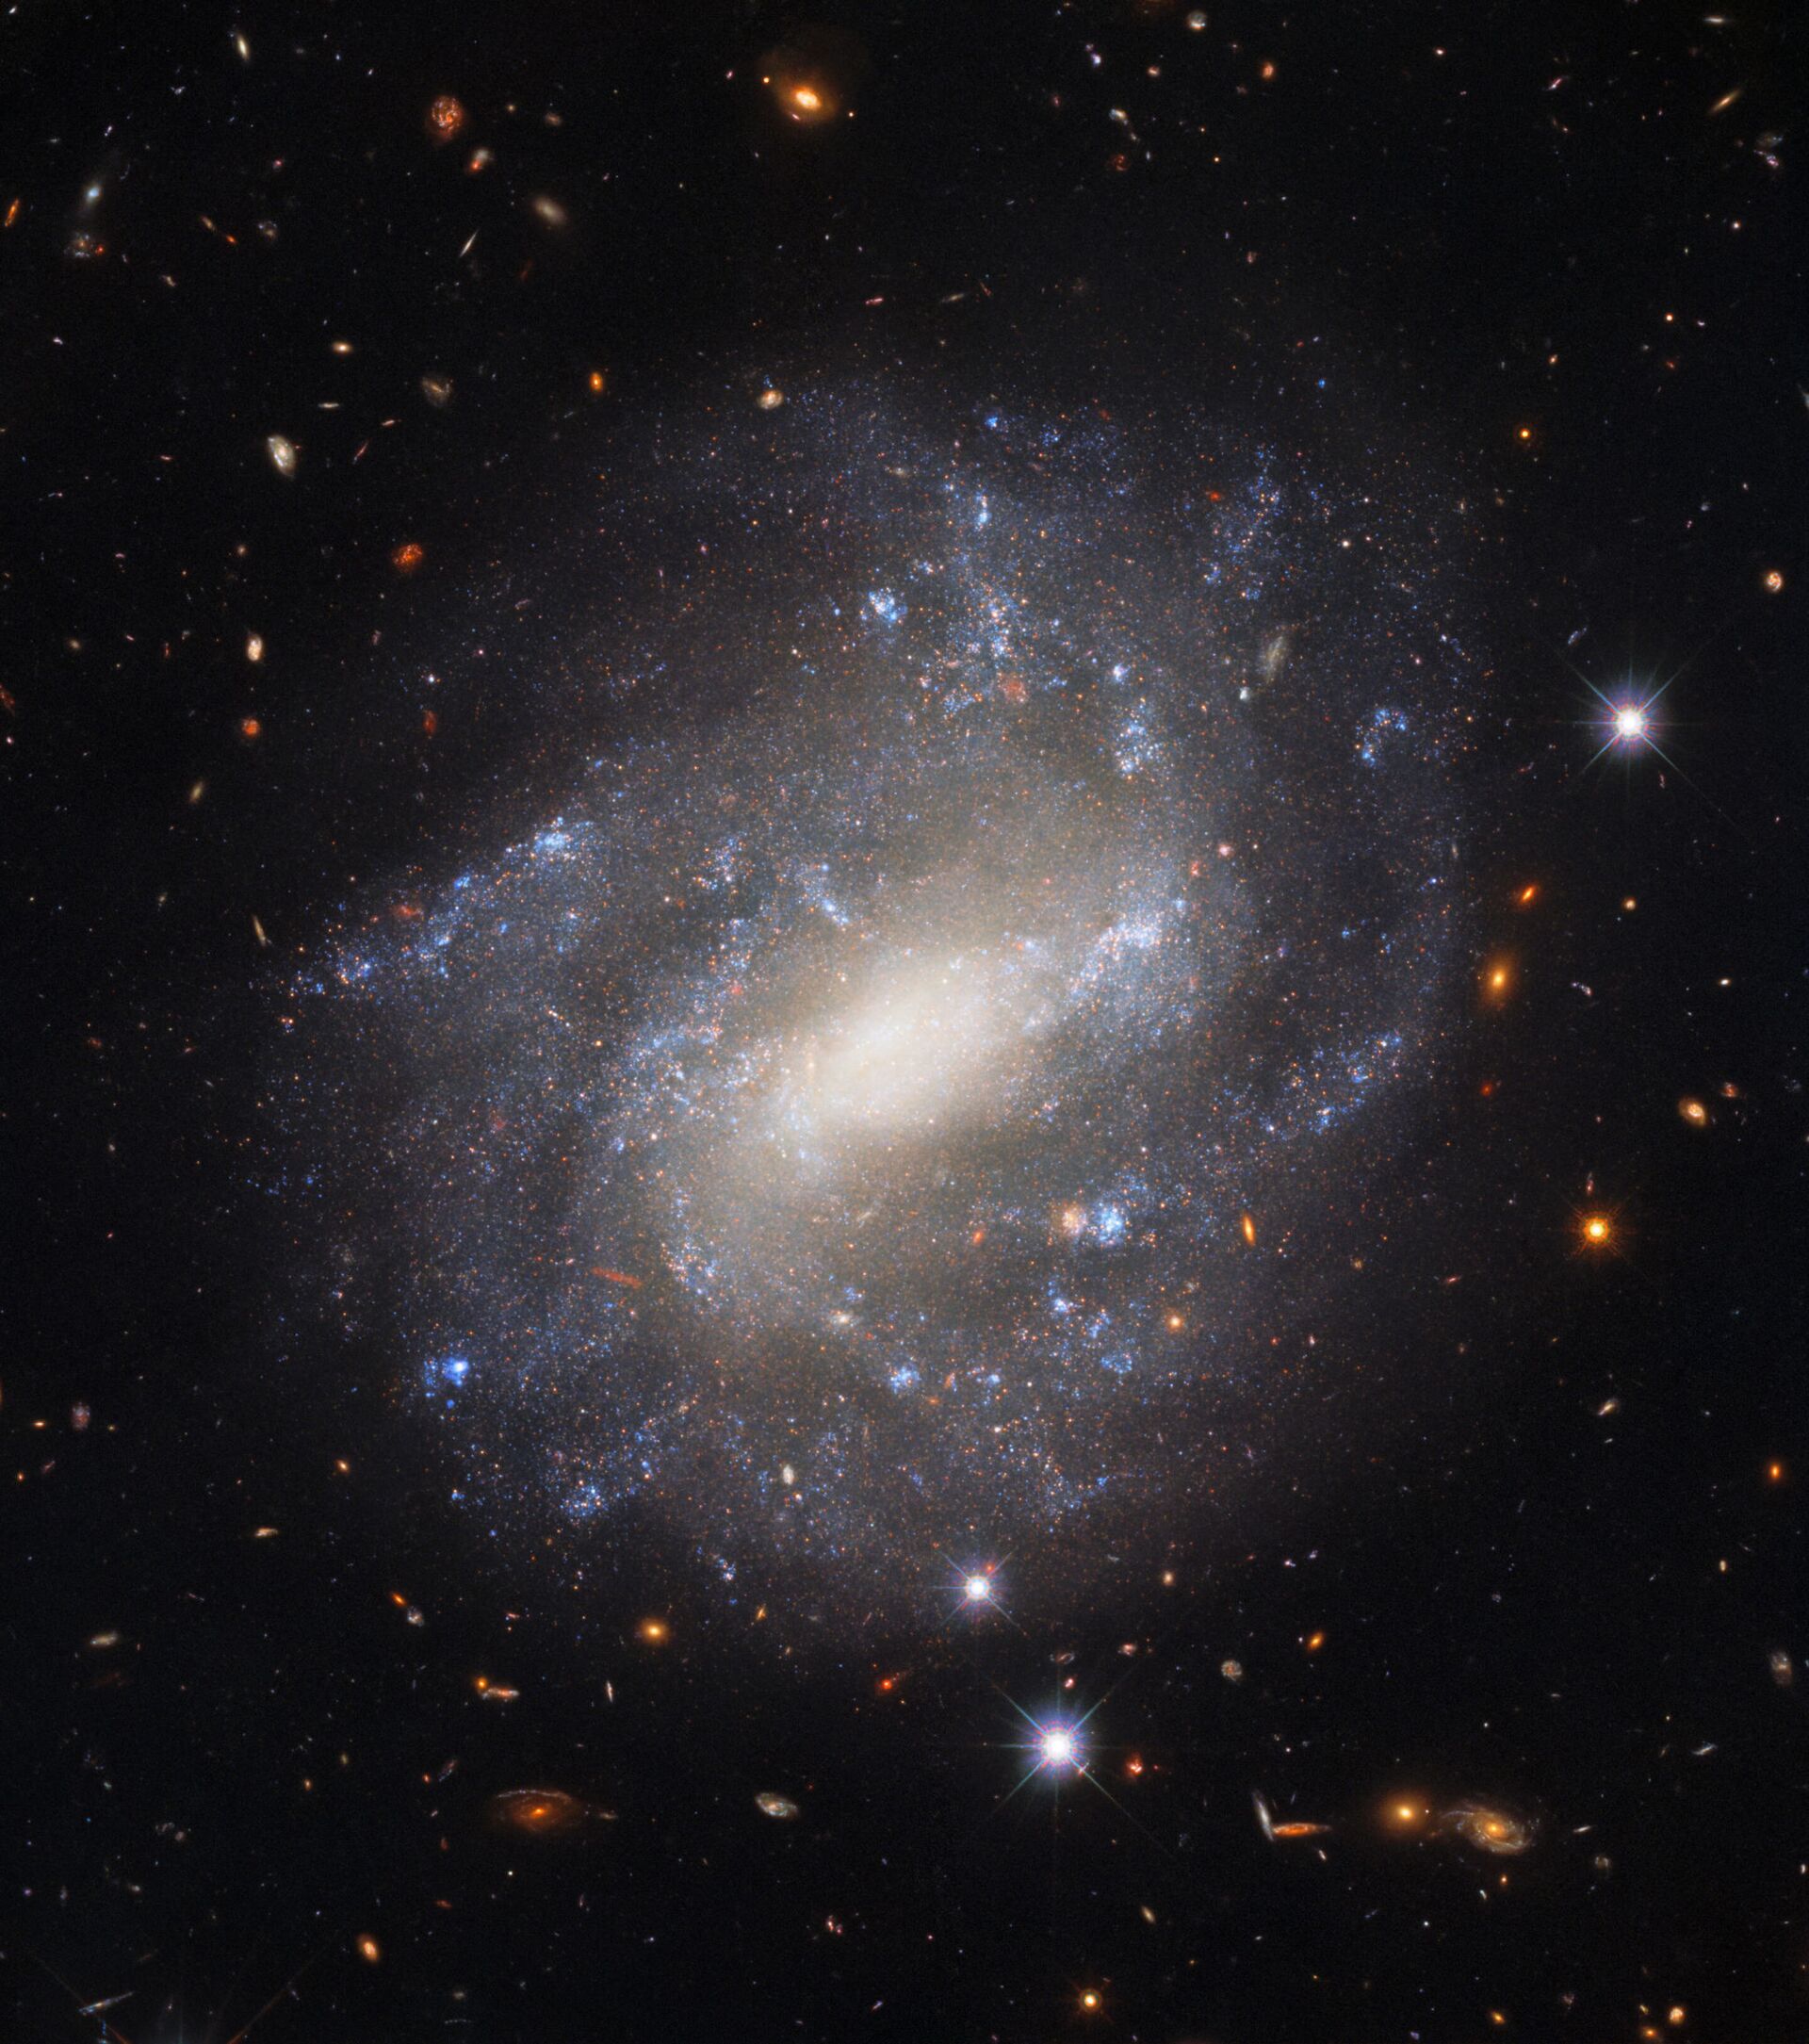 Galáxia espiral UGC 9391 - Sputnik Brasil, 1920, 27.12.2021